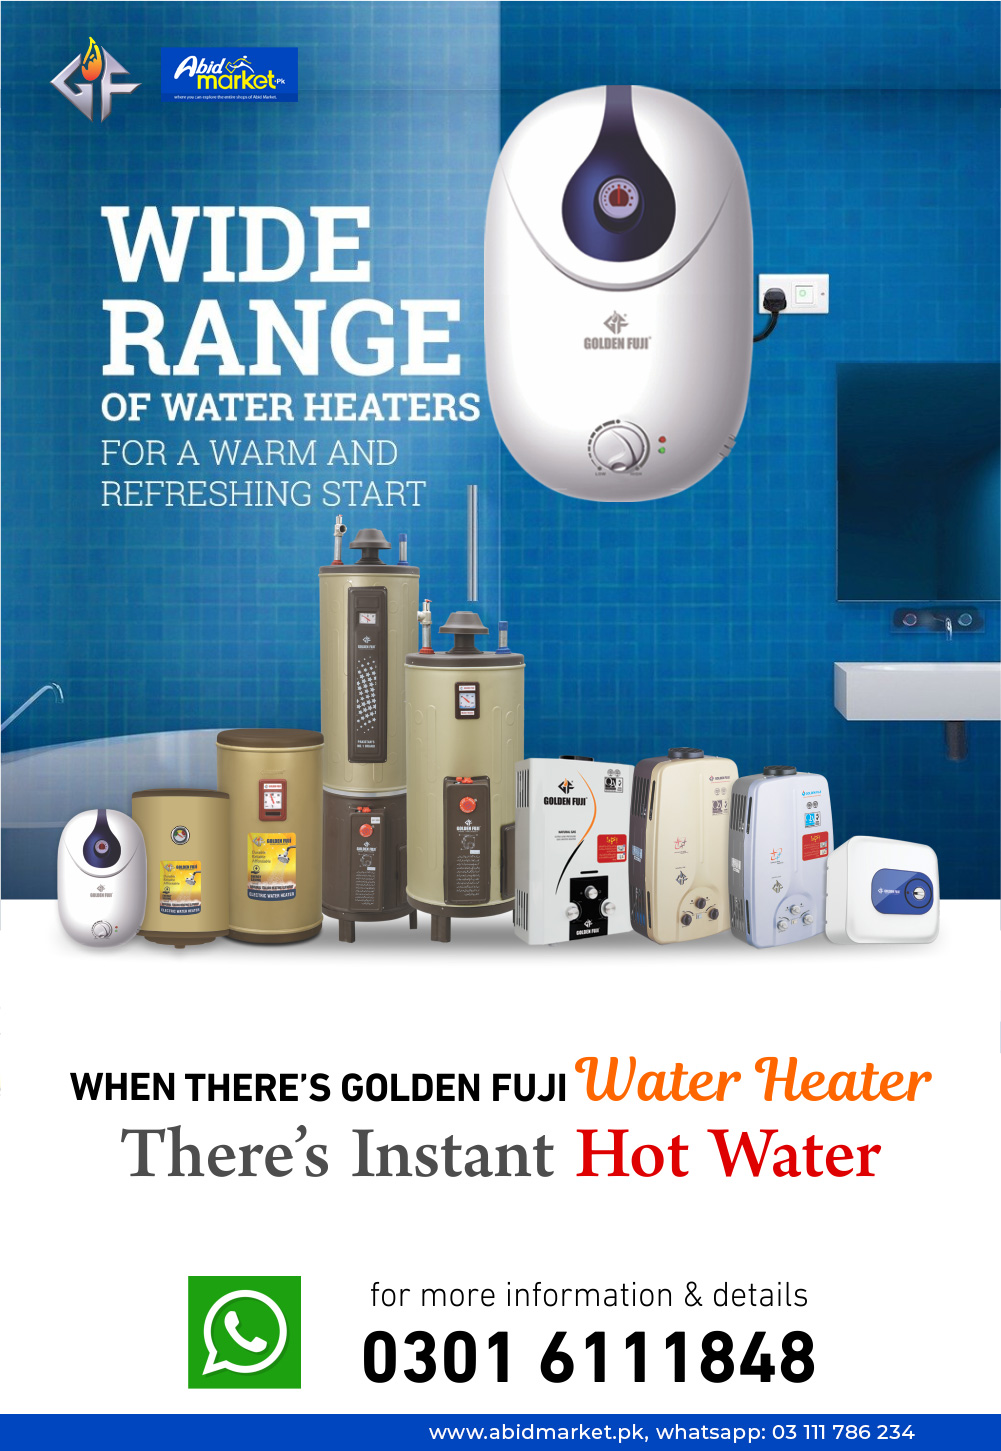 01--Abid-Market-Lahore-Golden-fuji-Electric-Water-Heater-DL-01-02